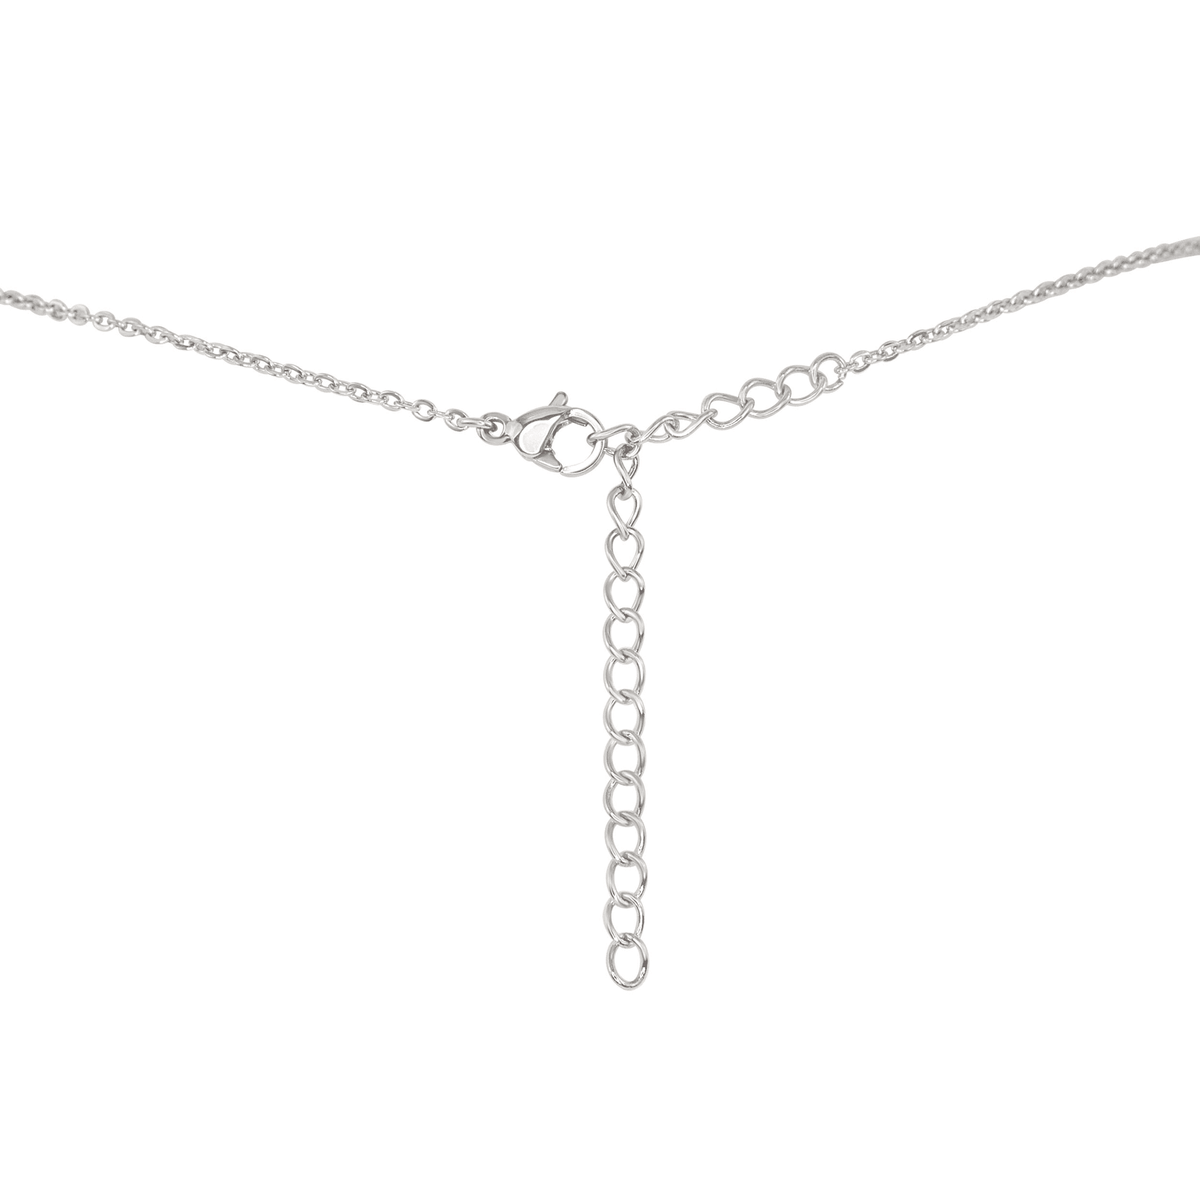 Crystal Quartz Beaded Chain Choker Necklace - Crystal Quartz Beaded Chain Choker Necklace - 14k Gold Fill - Luna Tide Handmade Crystal Jewellery